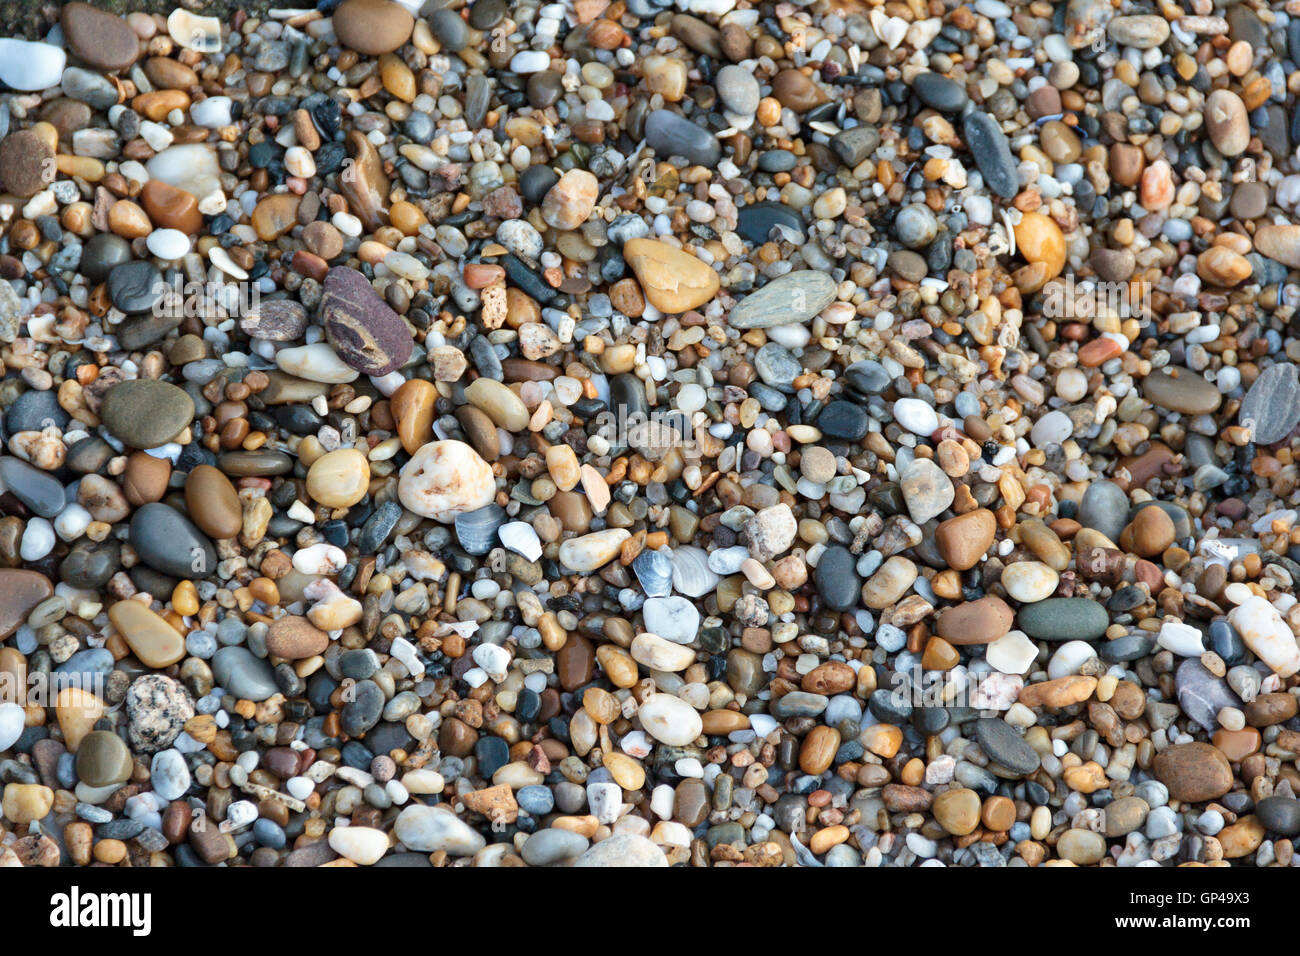 pebble, warm, stone, reflections, october, sea, rays, shore, background, gravel, mound, gray, beach, wet, blurred, texture, pebb Stock Photo